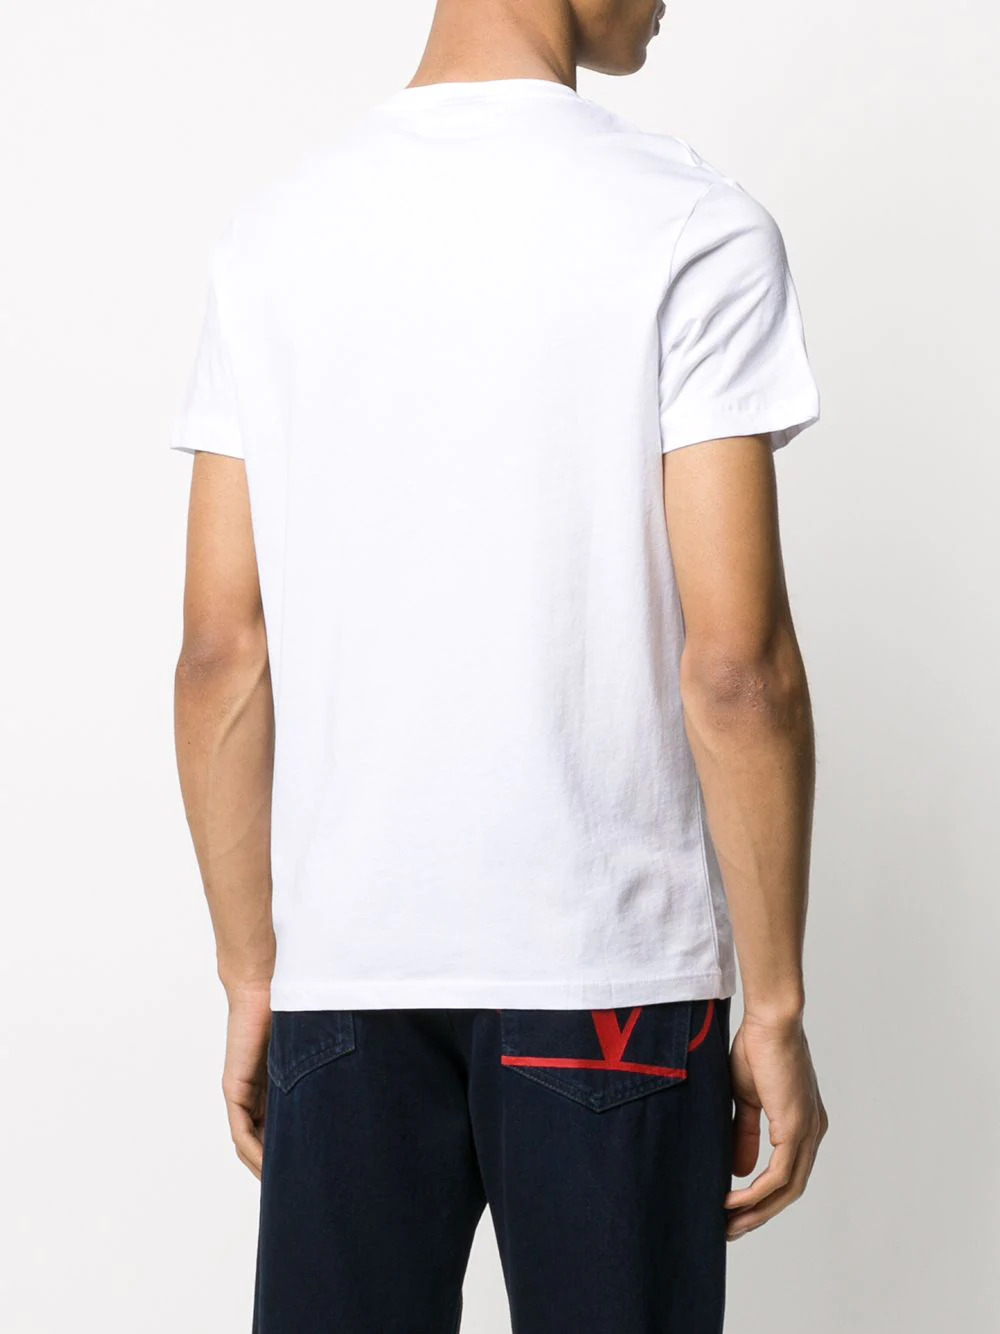 Karl Lagerfeld White T-Shirt - Rogue